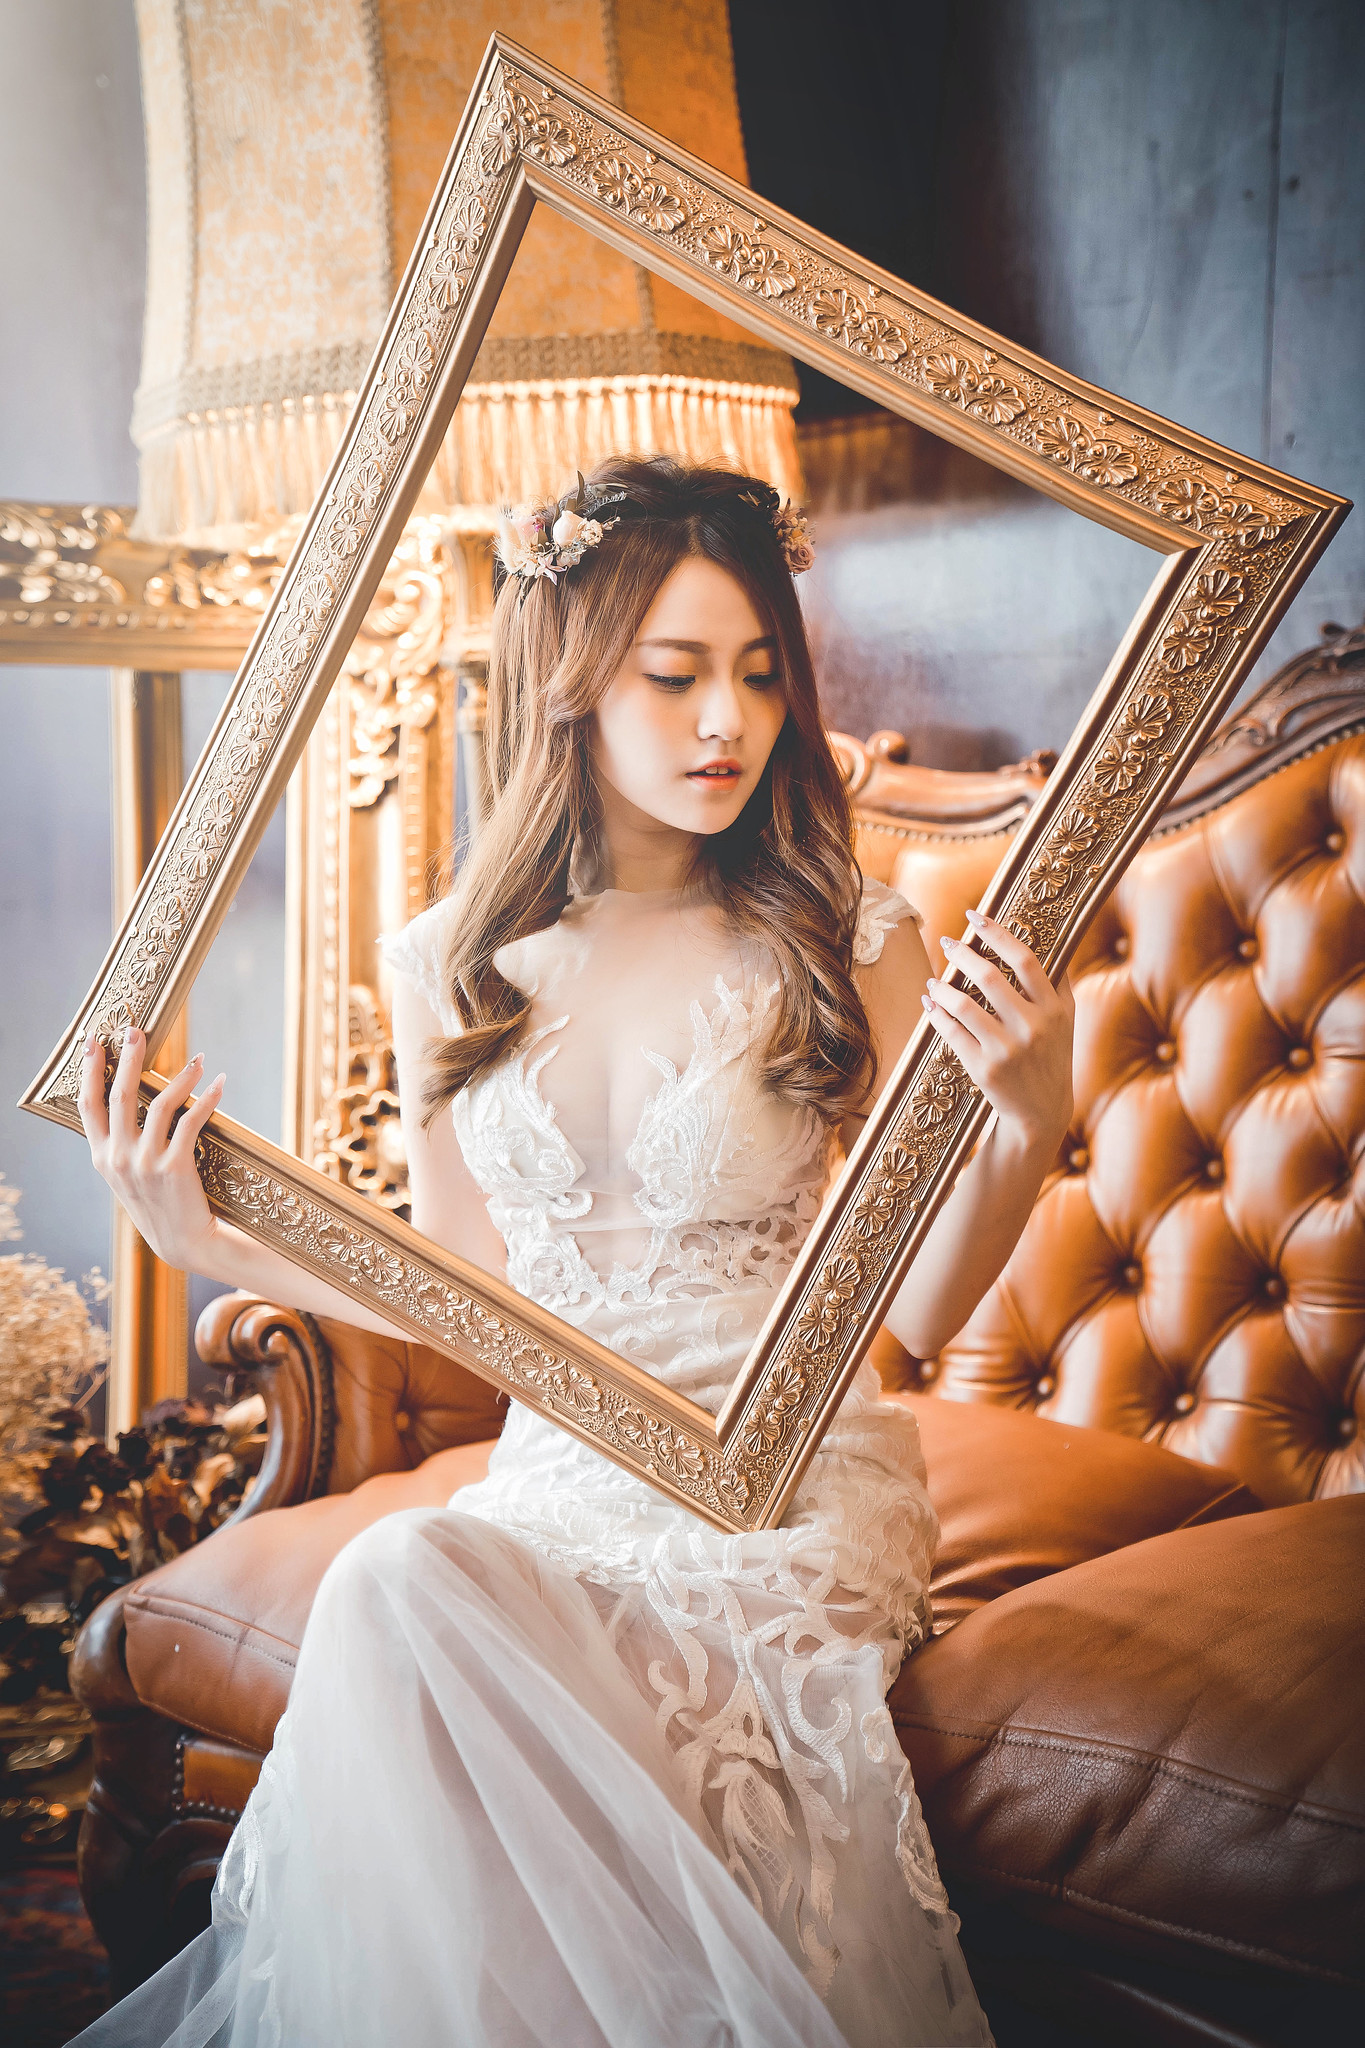 People 1365x2048 picture frames Asian women model women indoors brunette wreaths brides Mimi Peng wedding dress